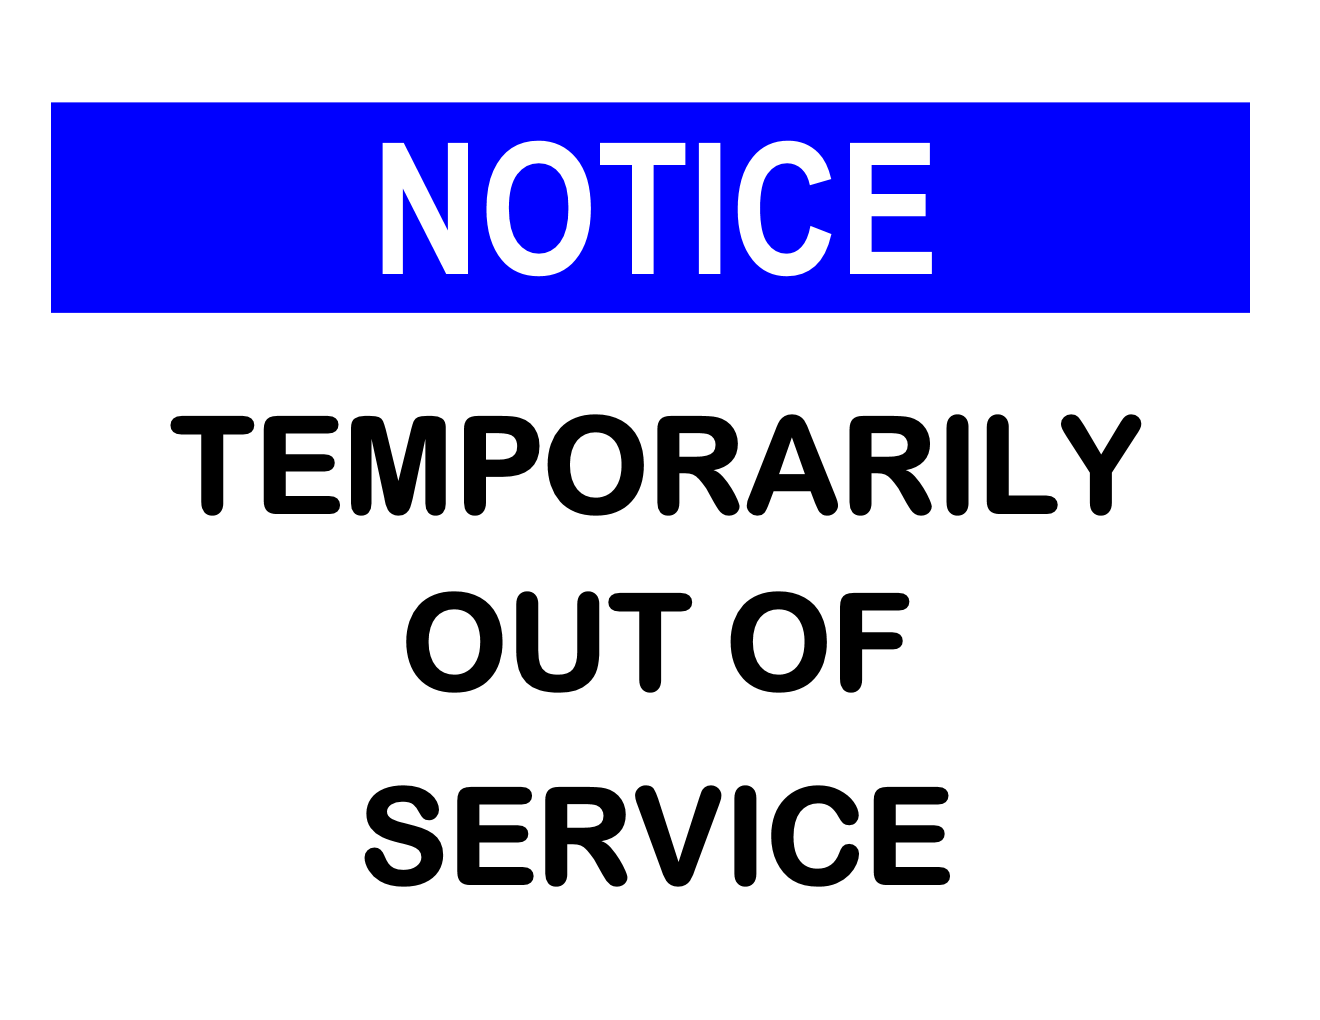 Service notice